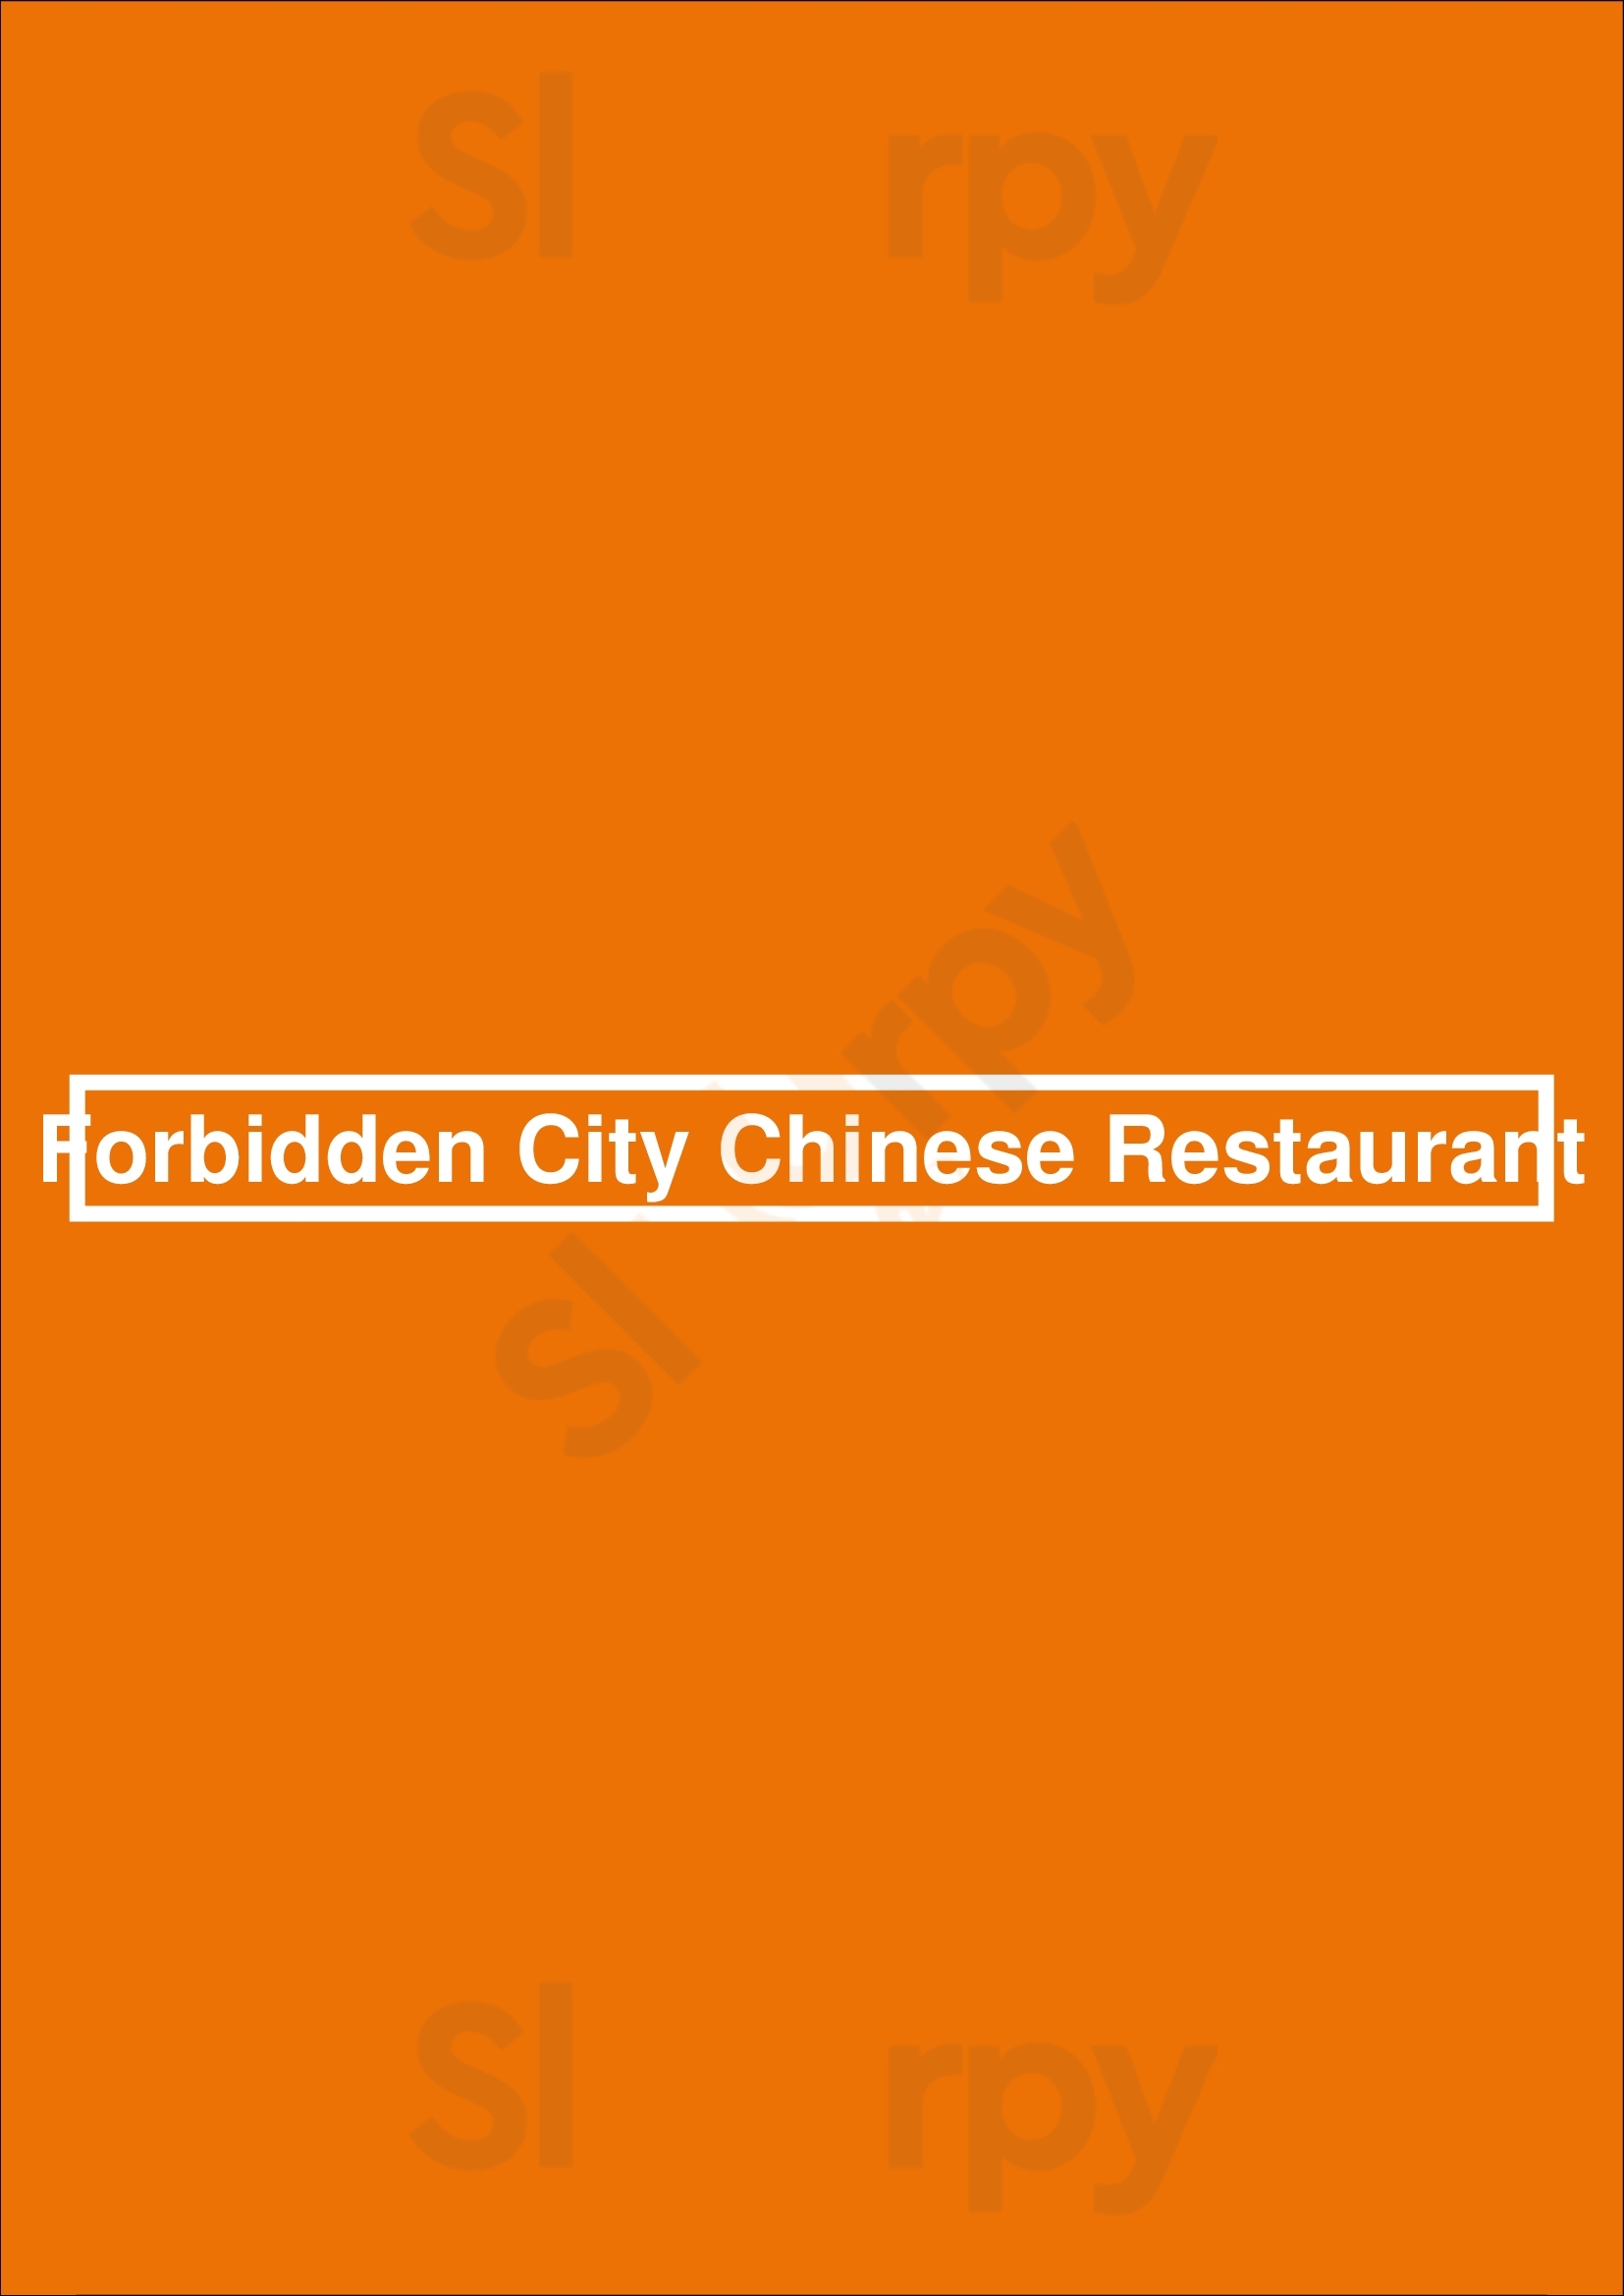 Forbidden City Chinese Restaurant Hamilton Menu - 1